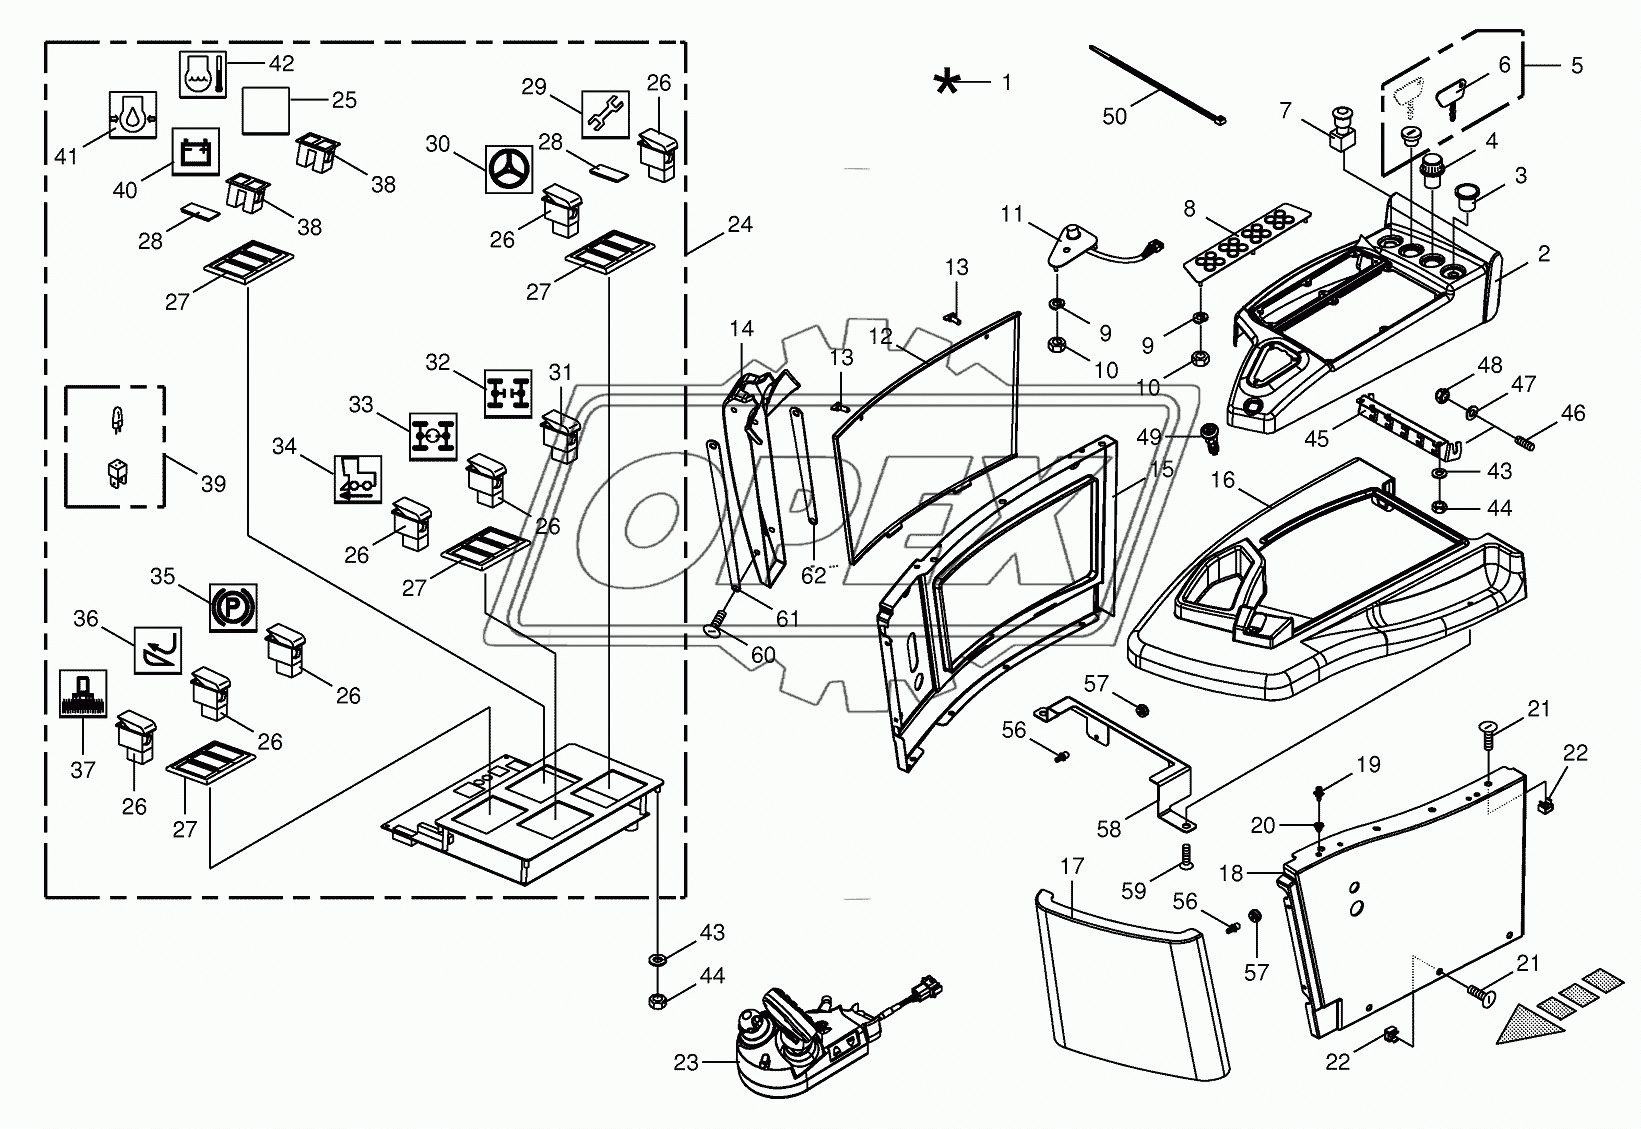 Control box mounting parts